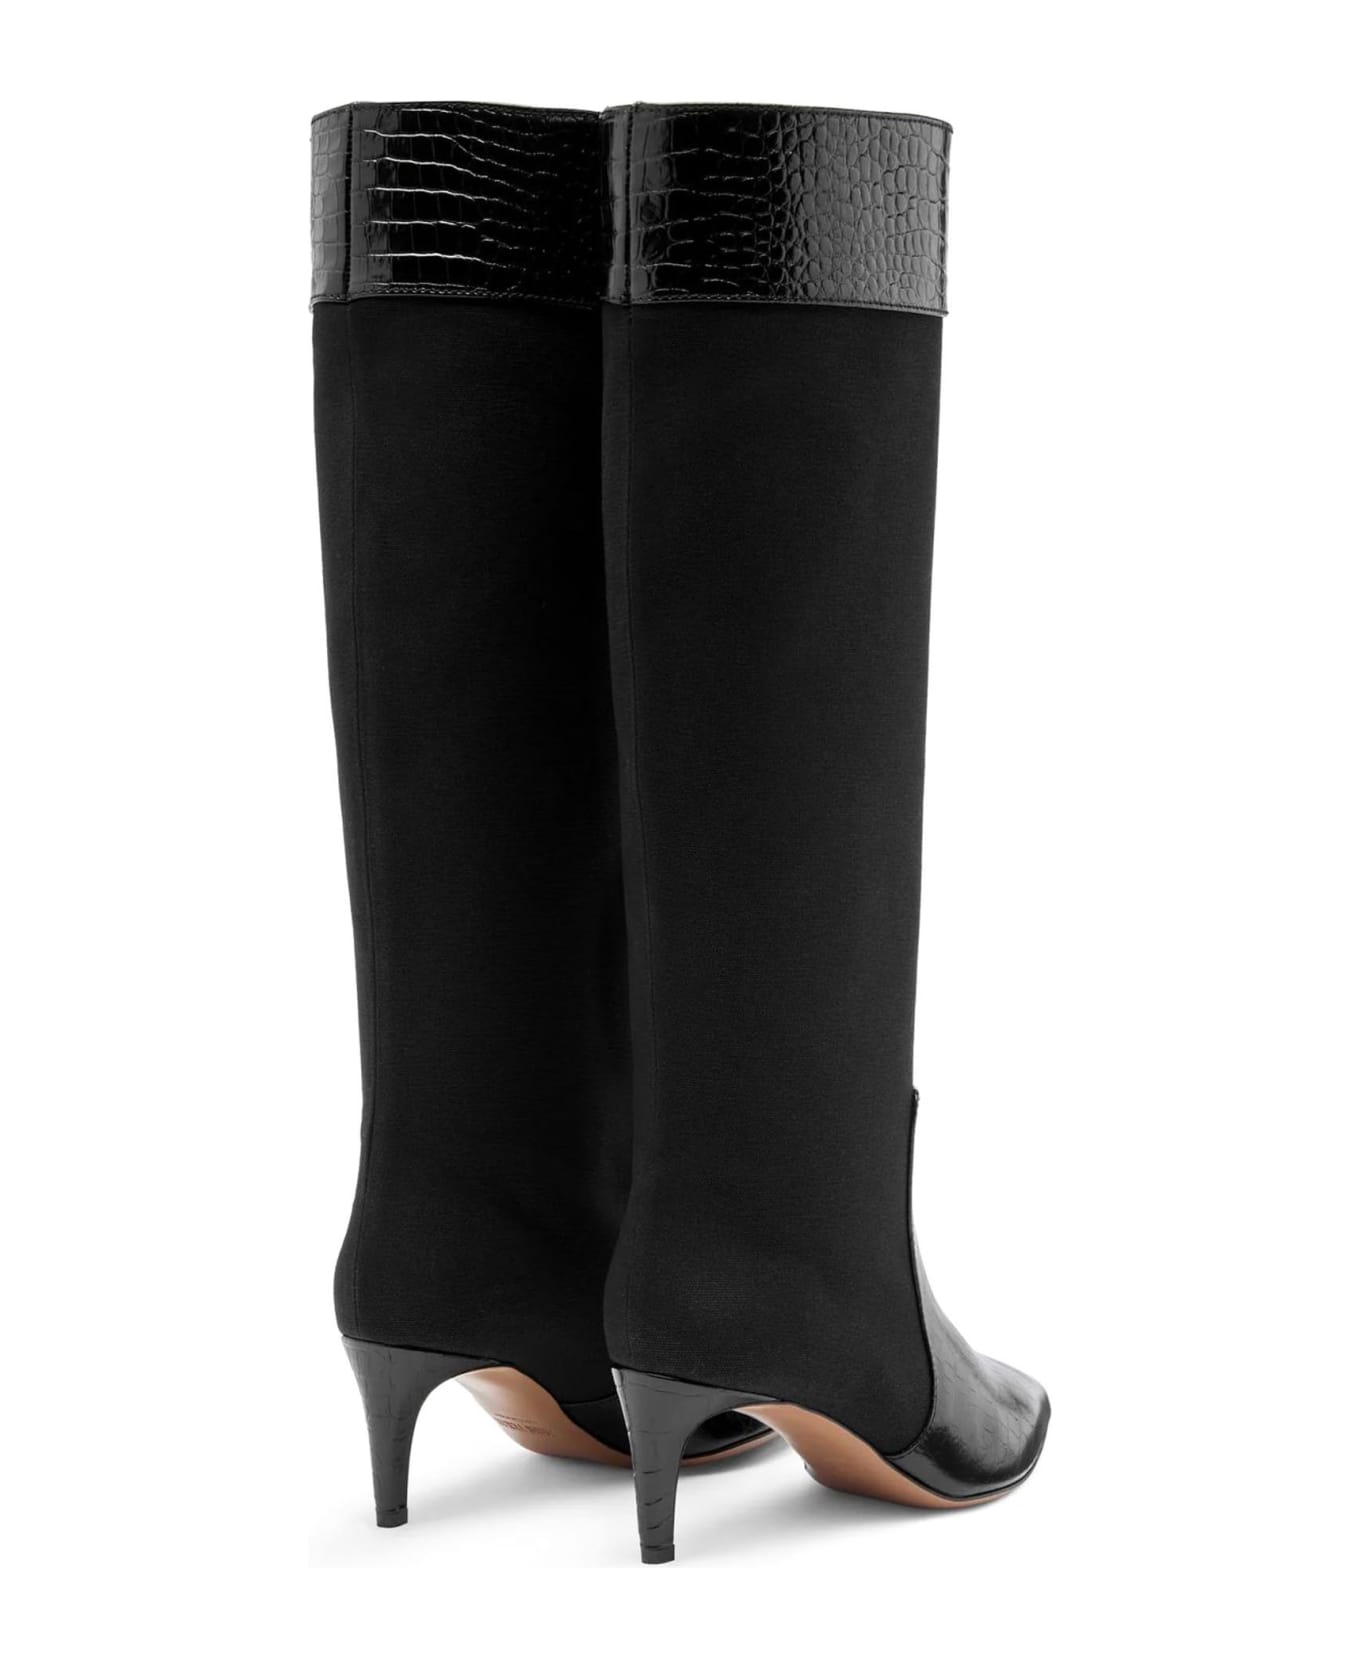 Paris Texas Black Stiletto Boot - Black